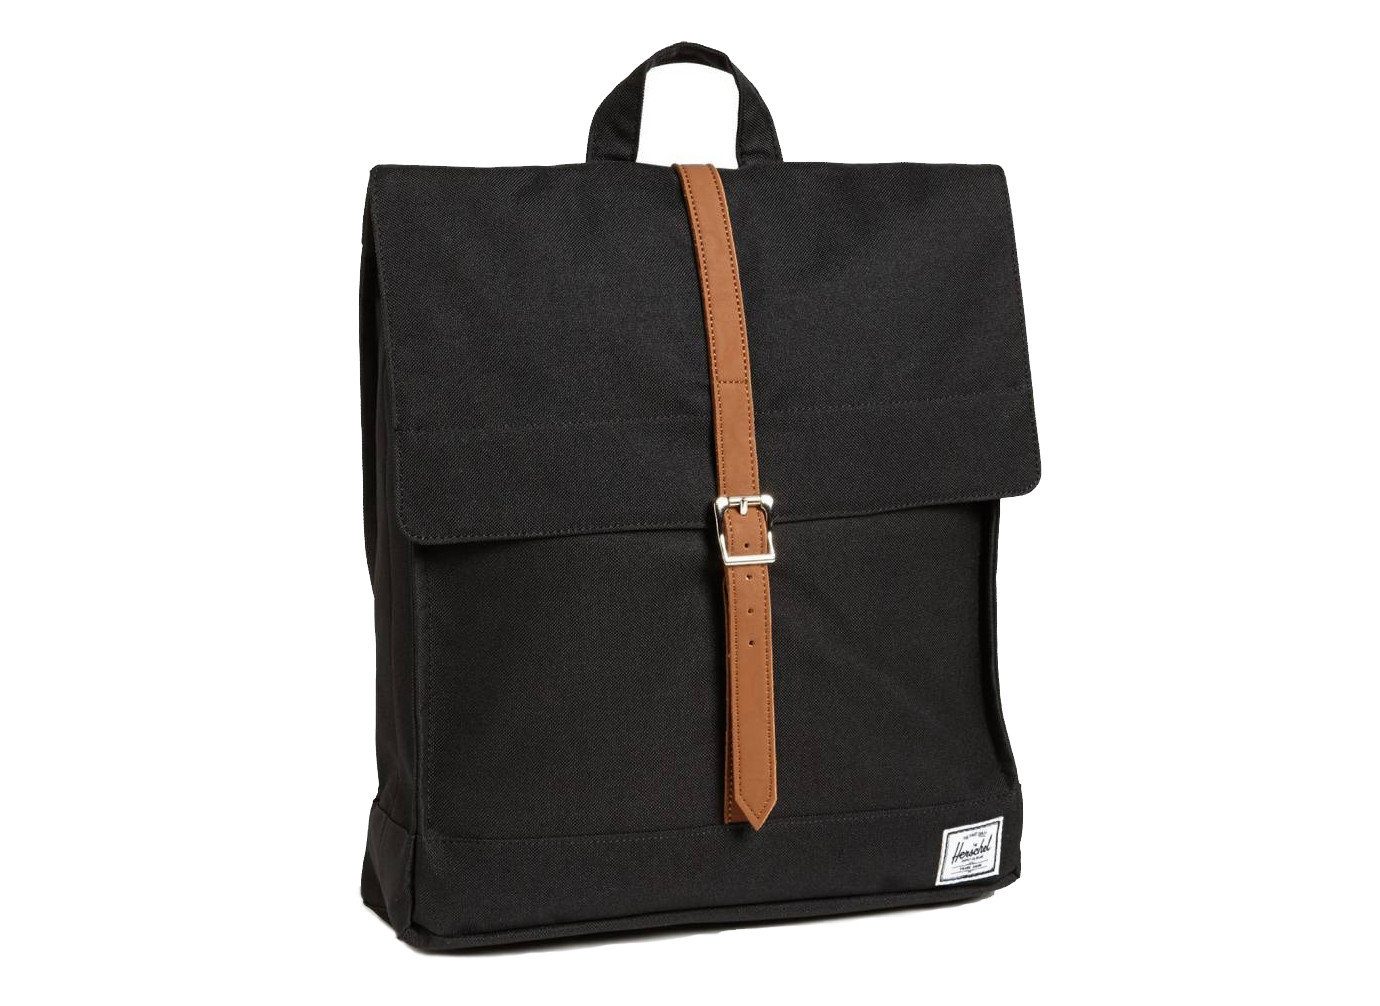 Travel Shop Travel Tips bag accessory product handbag case product design baggage shoulder bag luggage & bags brand leather hand luggage